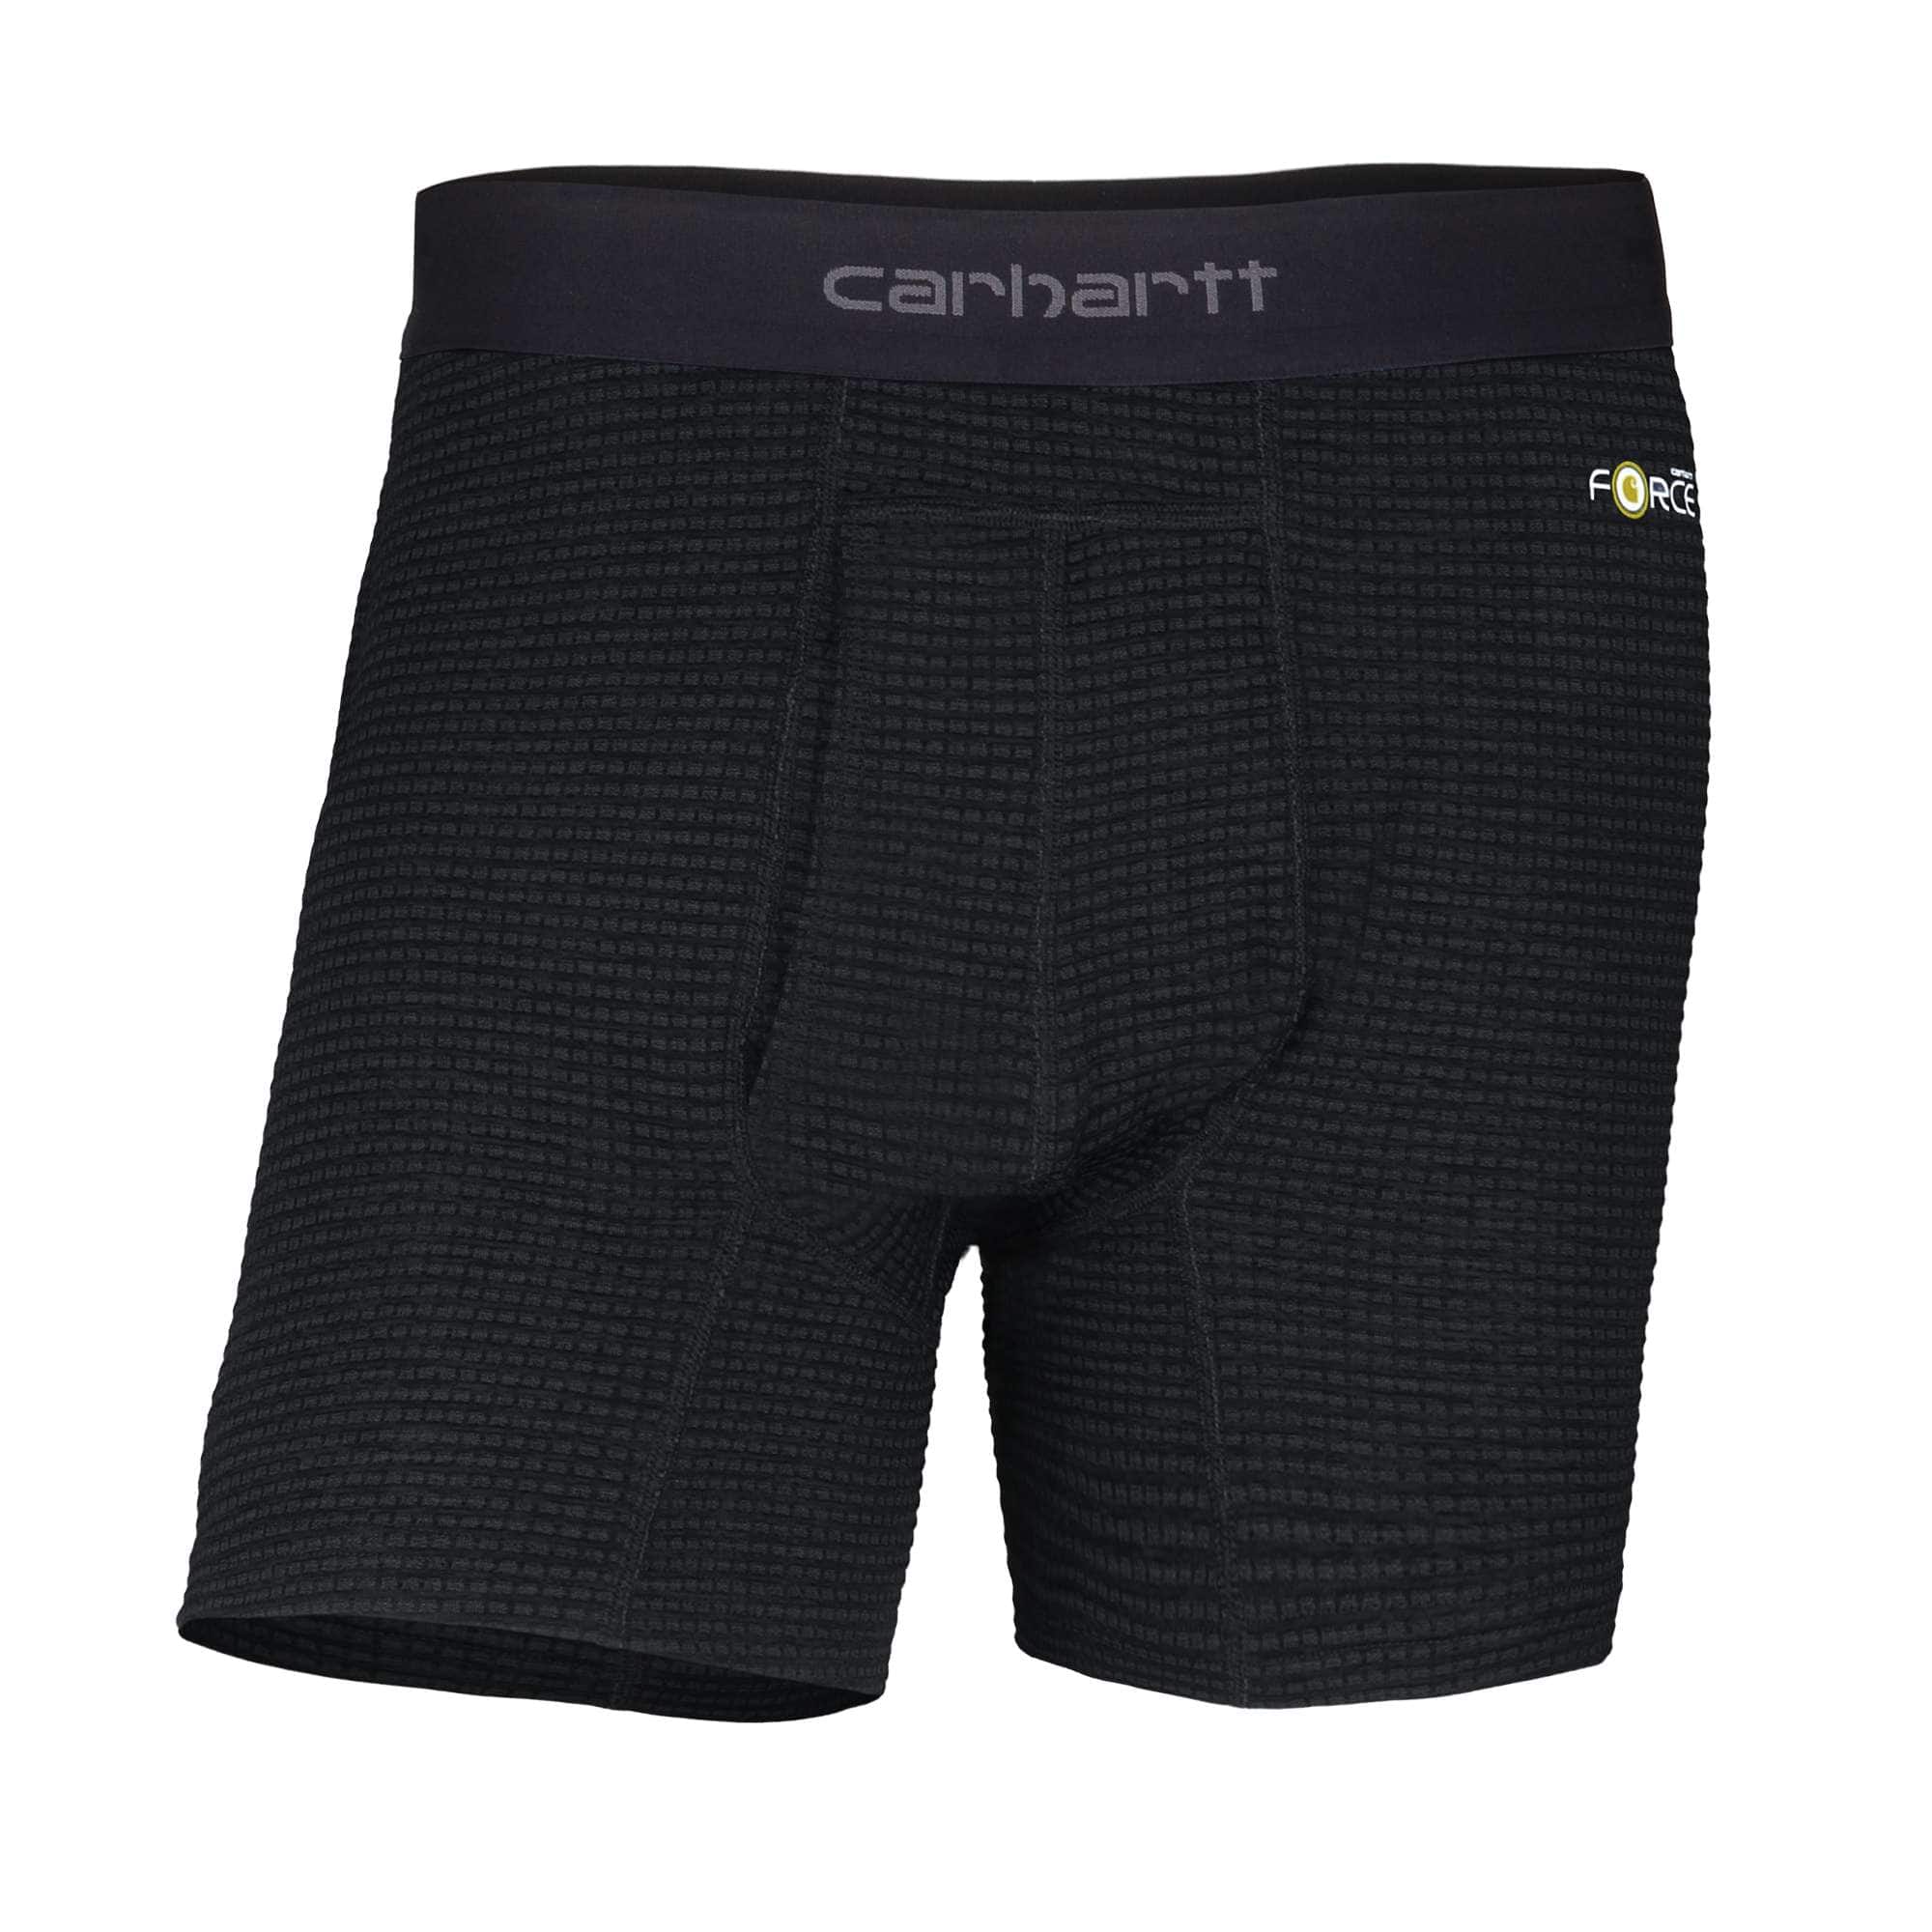 Men's Underwear, Carhartt